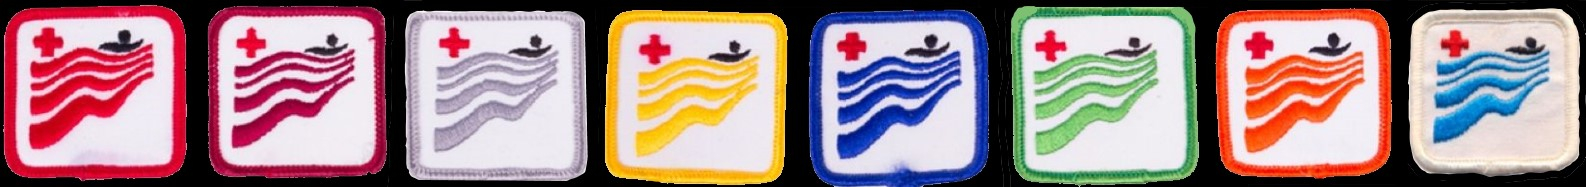 red cross swiming badges $